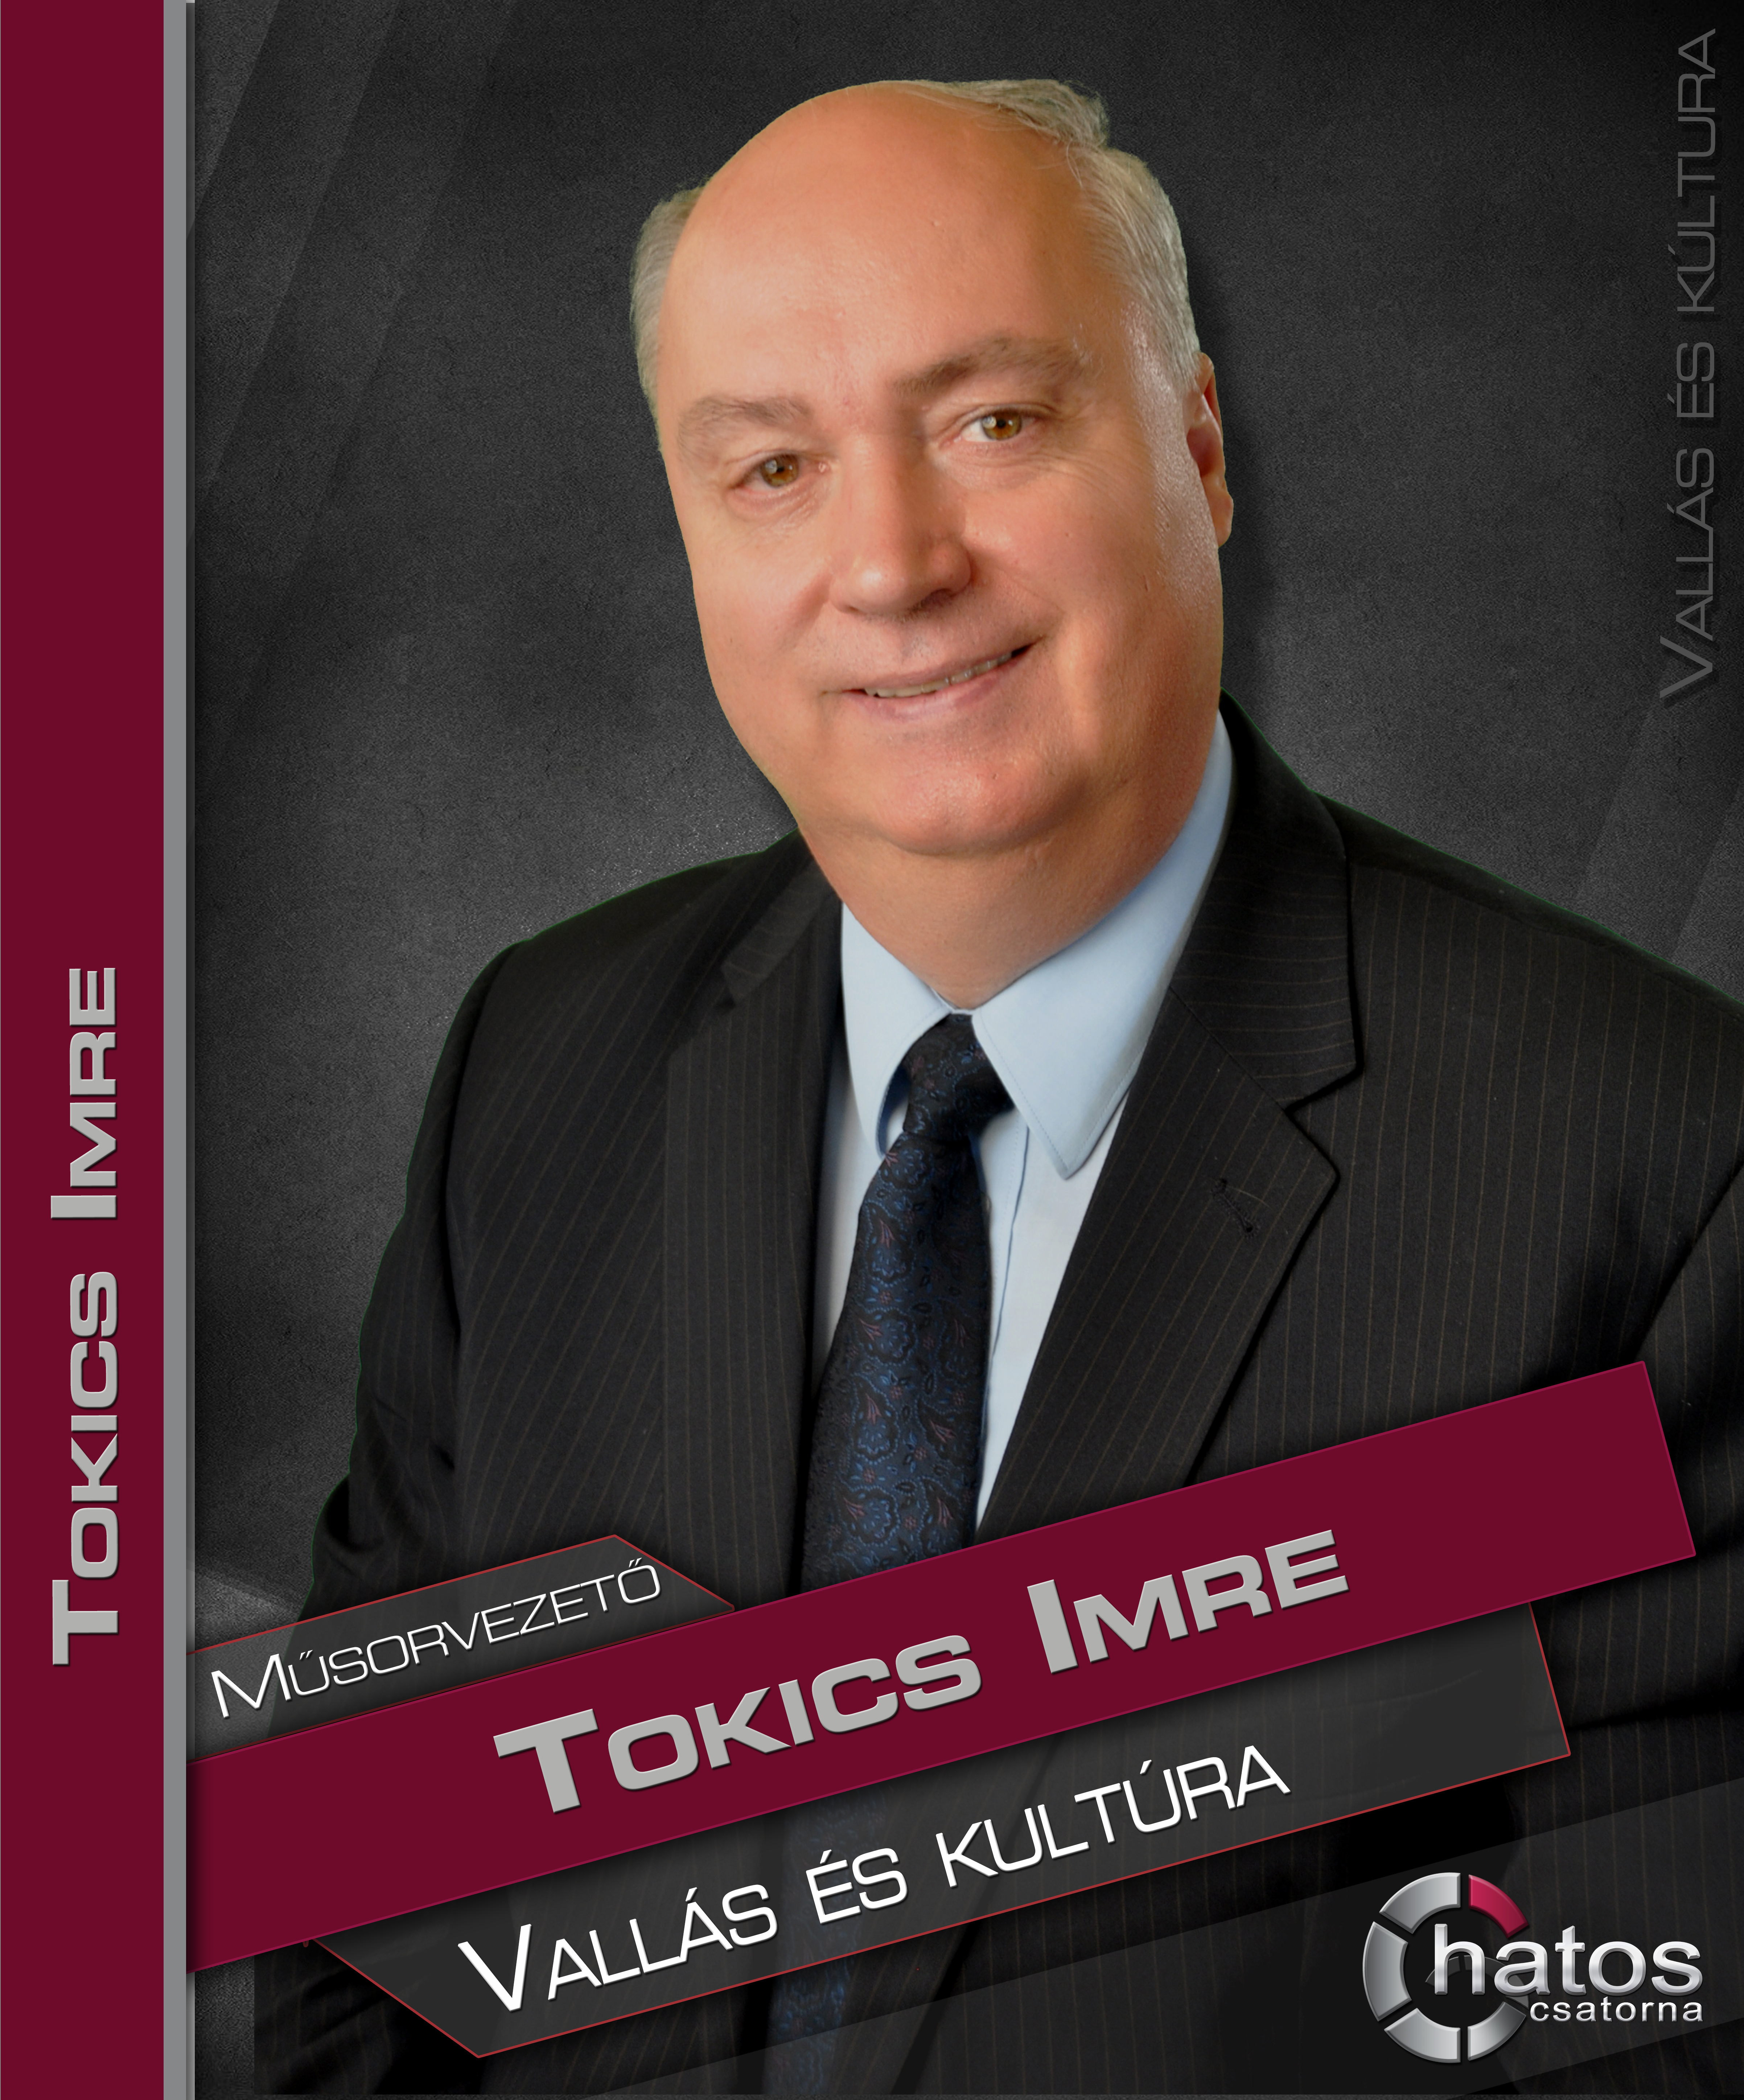 Dr. Tokics Imre